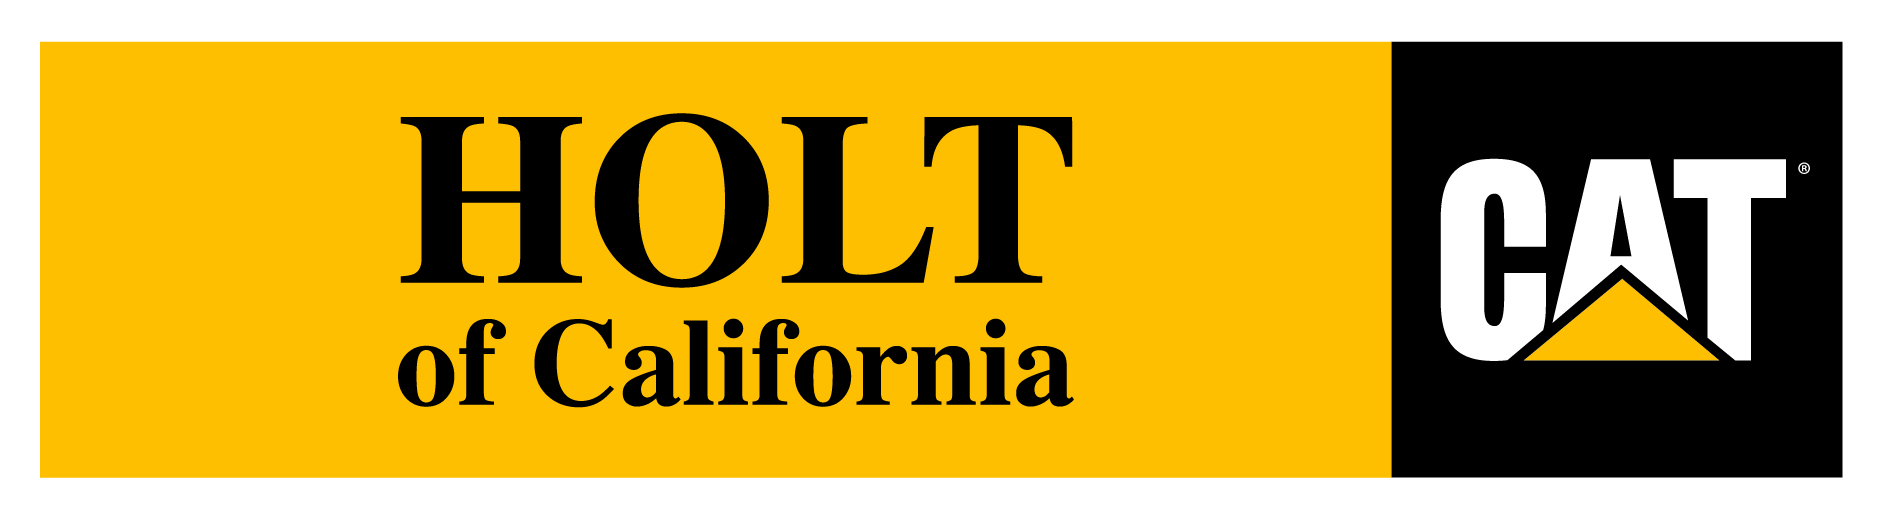 Holt of California, CAT Rental Store Logo